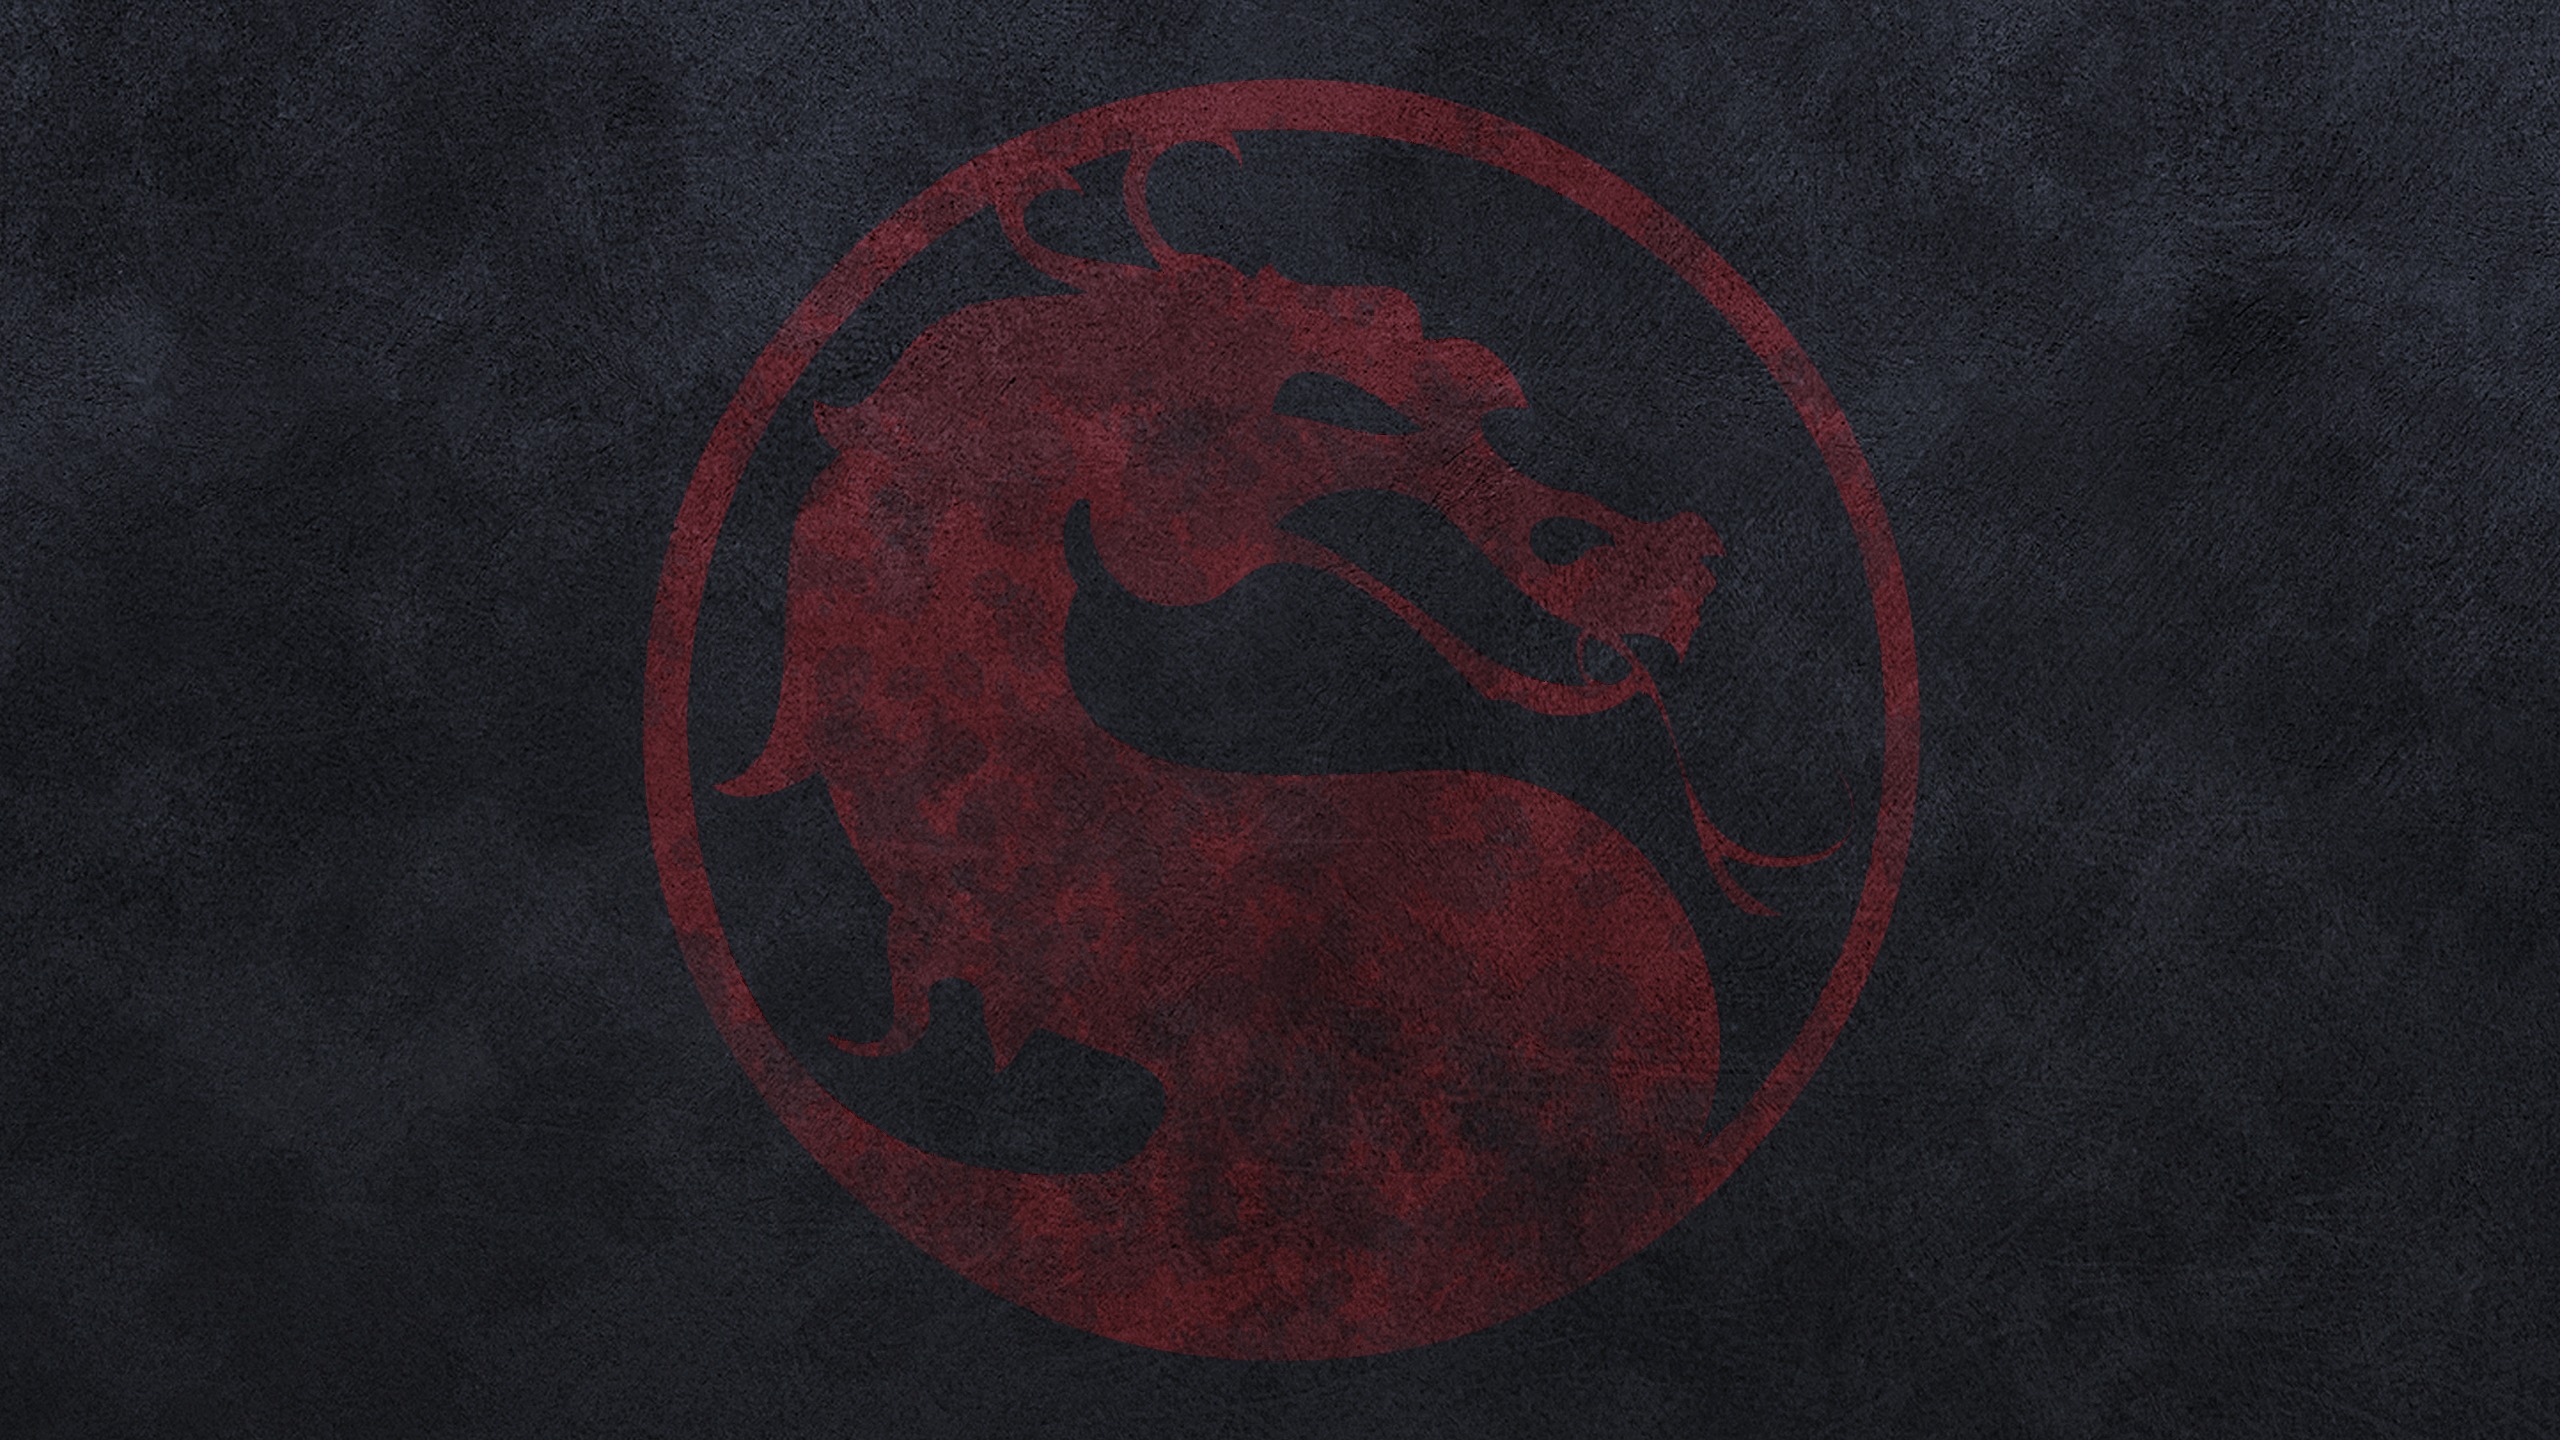 Mortal Kombat wallpaper Dragon on a dark background